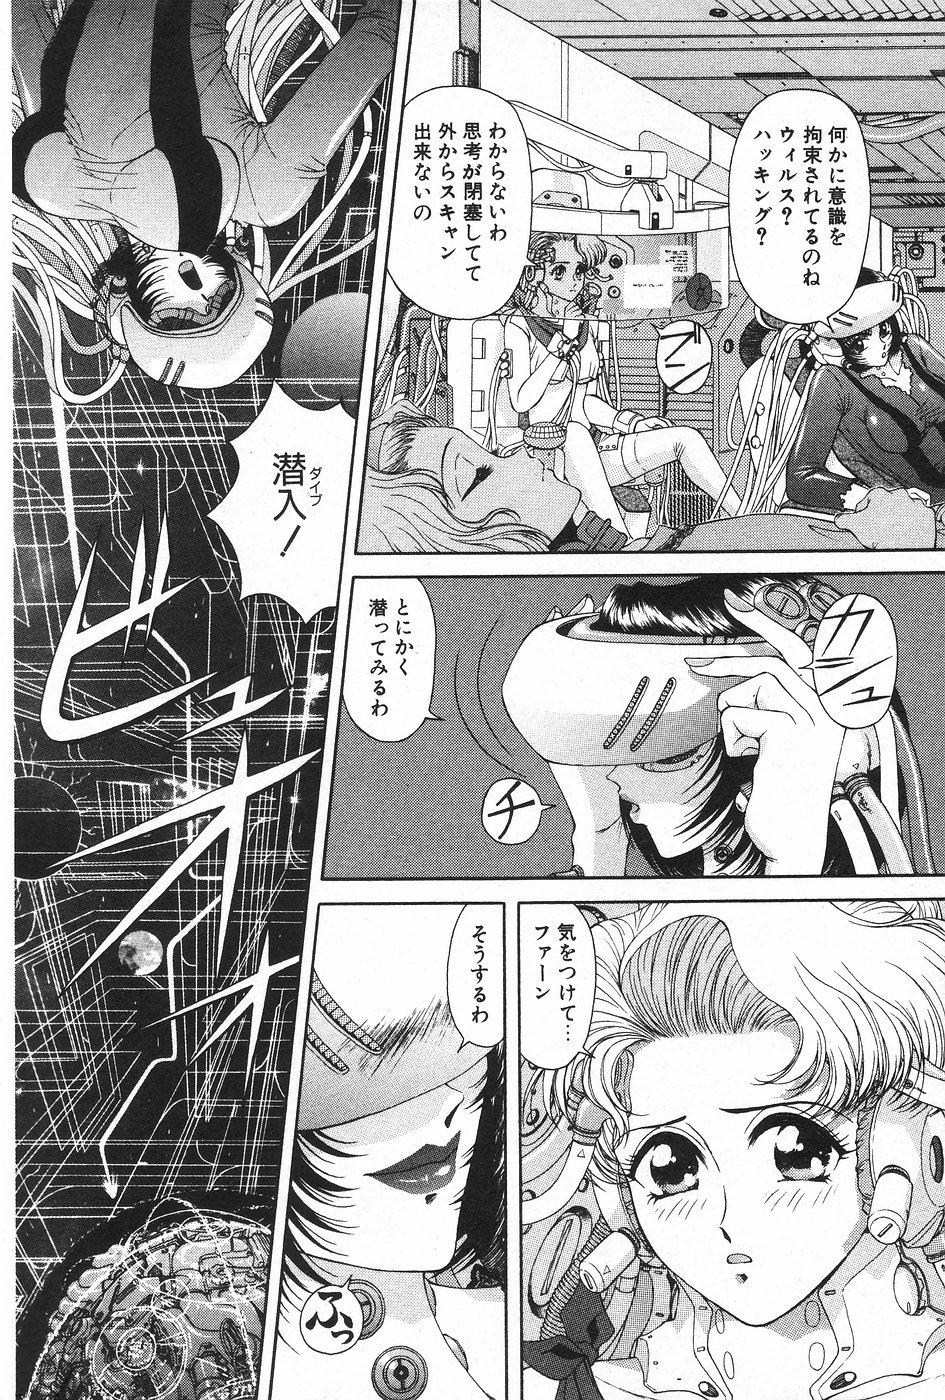 Manga Hotmilk 1997-04 55